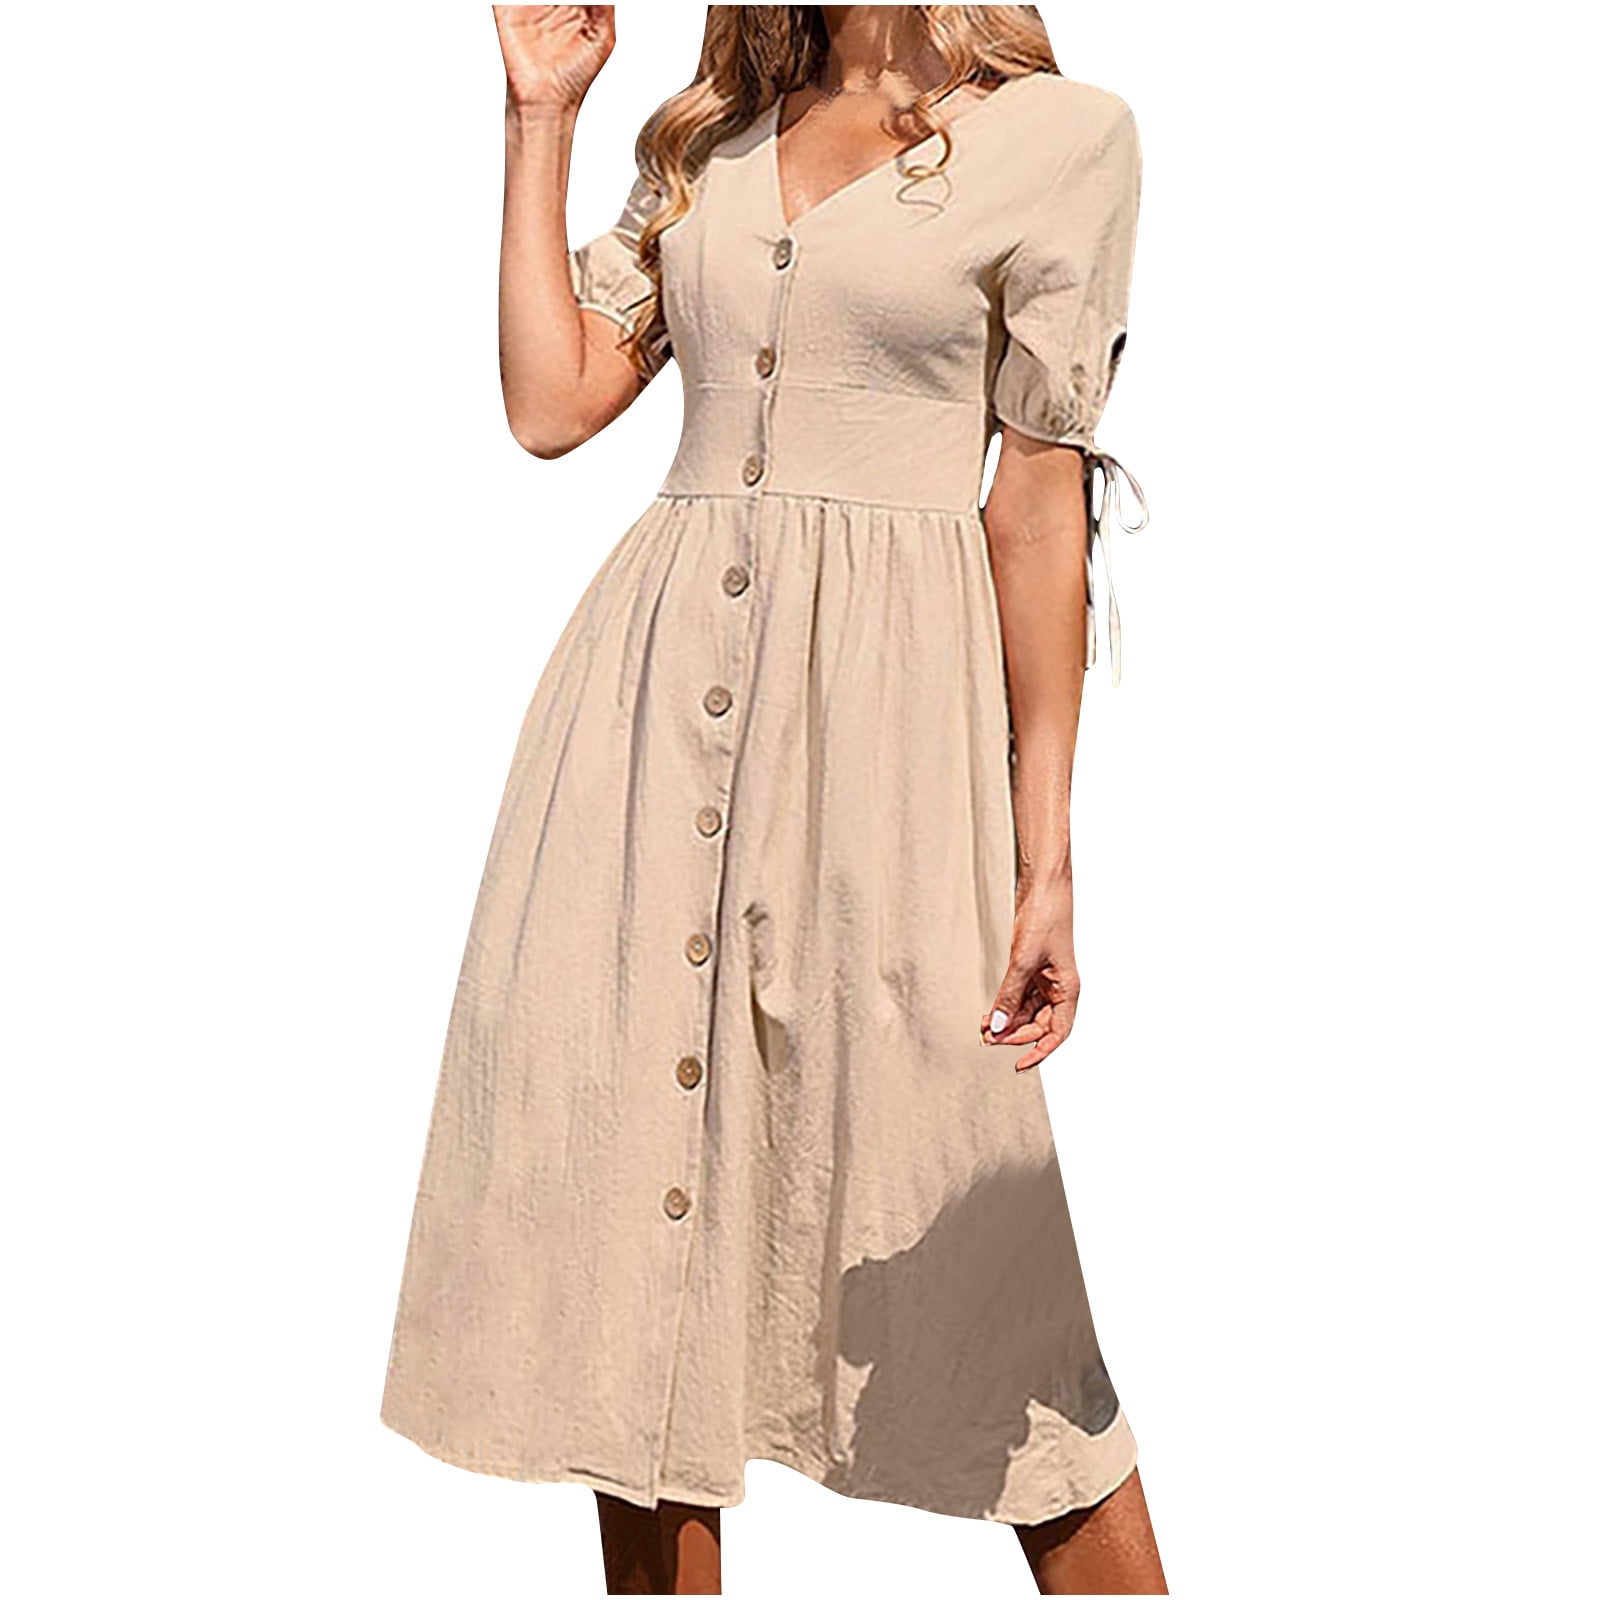 Kupretty Womens Vintage Cotton Linen A-line Dress Summer Casual